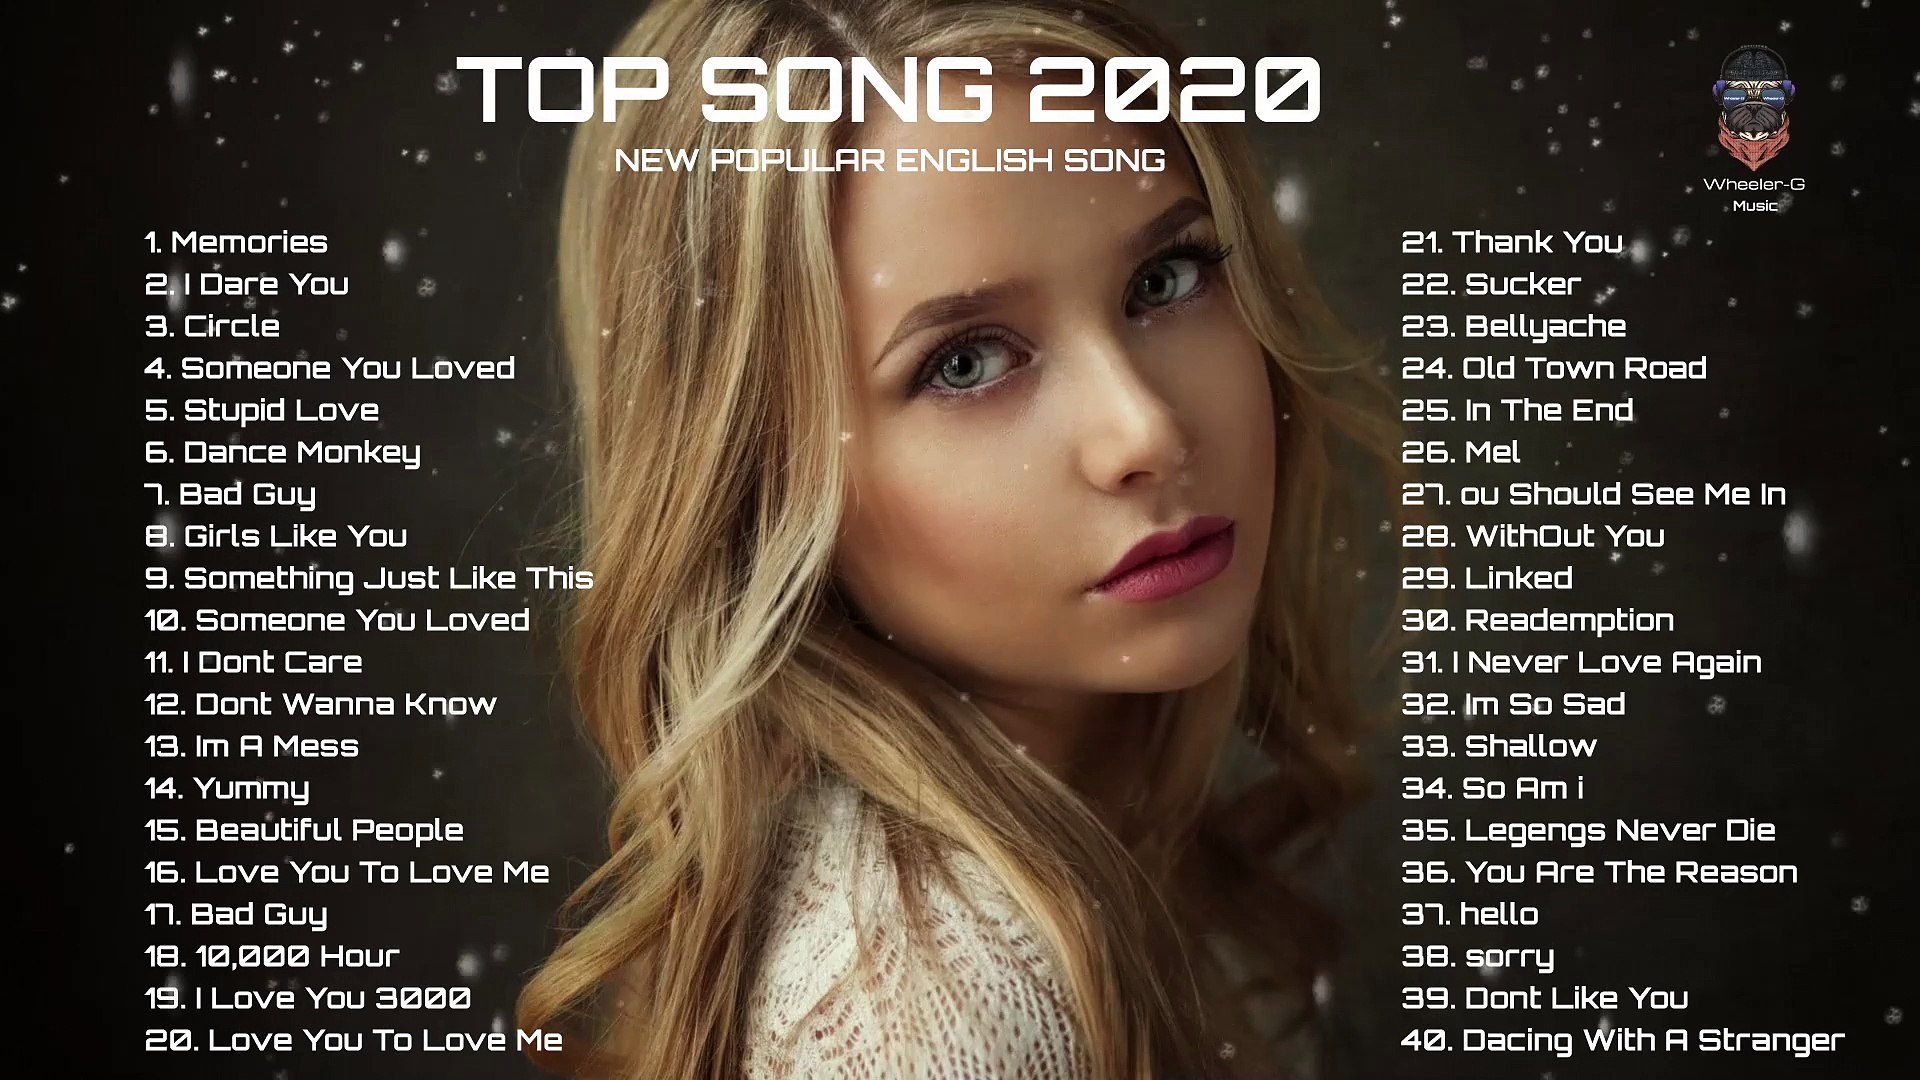 Music Top 50 Song - Music Billboard - Music Top Songs 2020    [Wheeler-G]